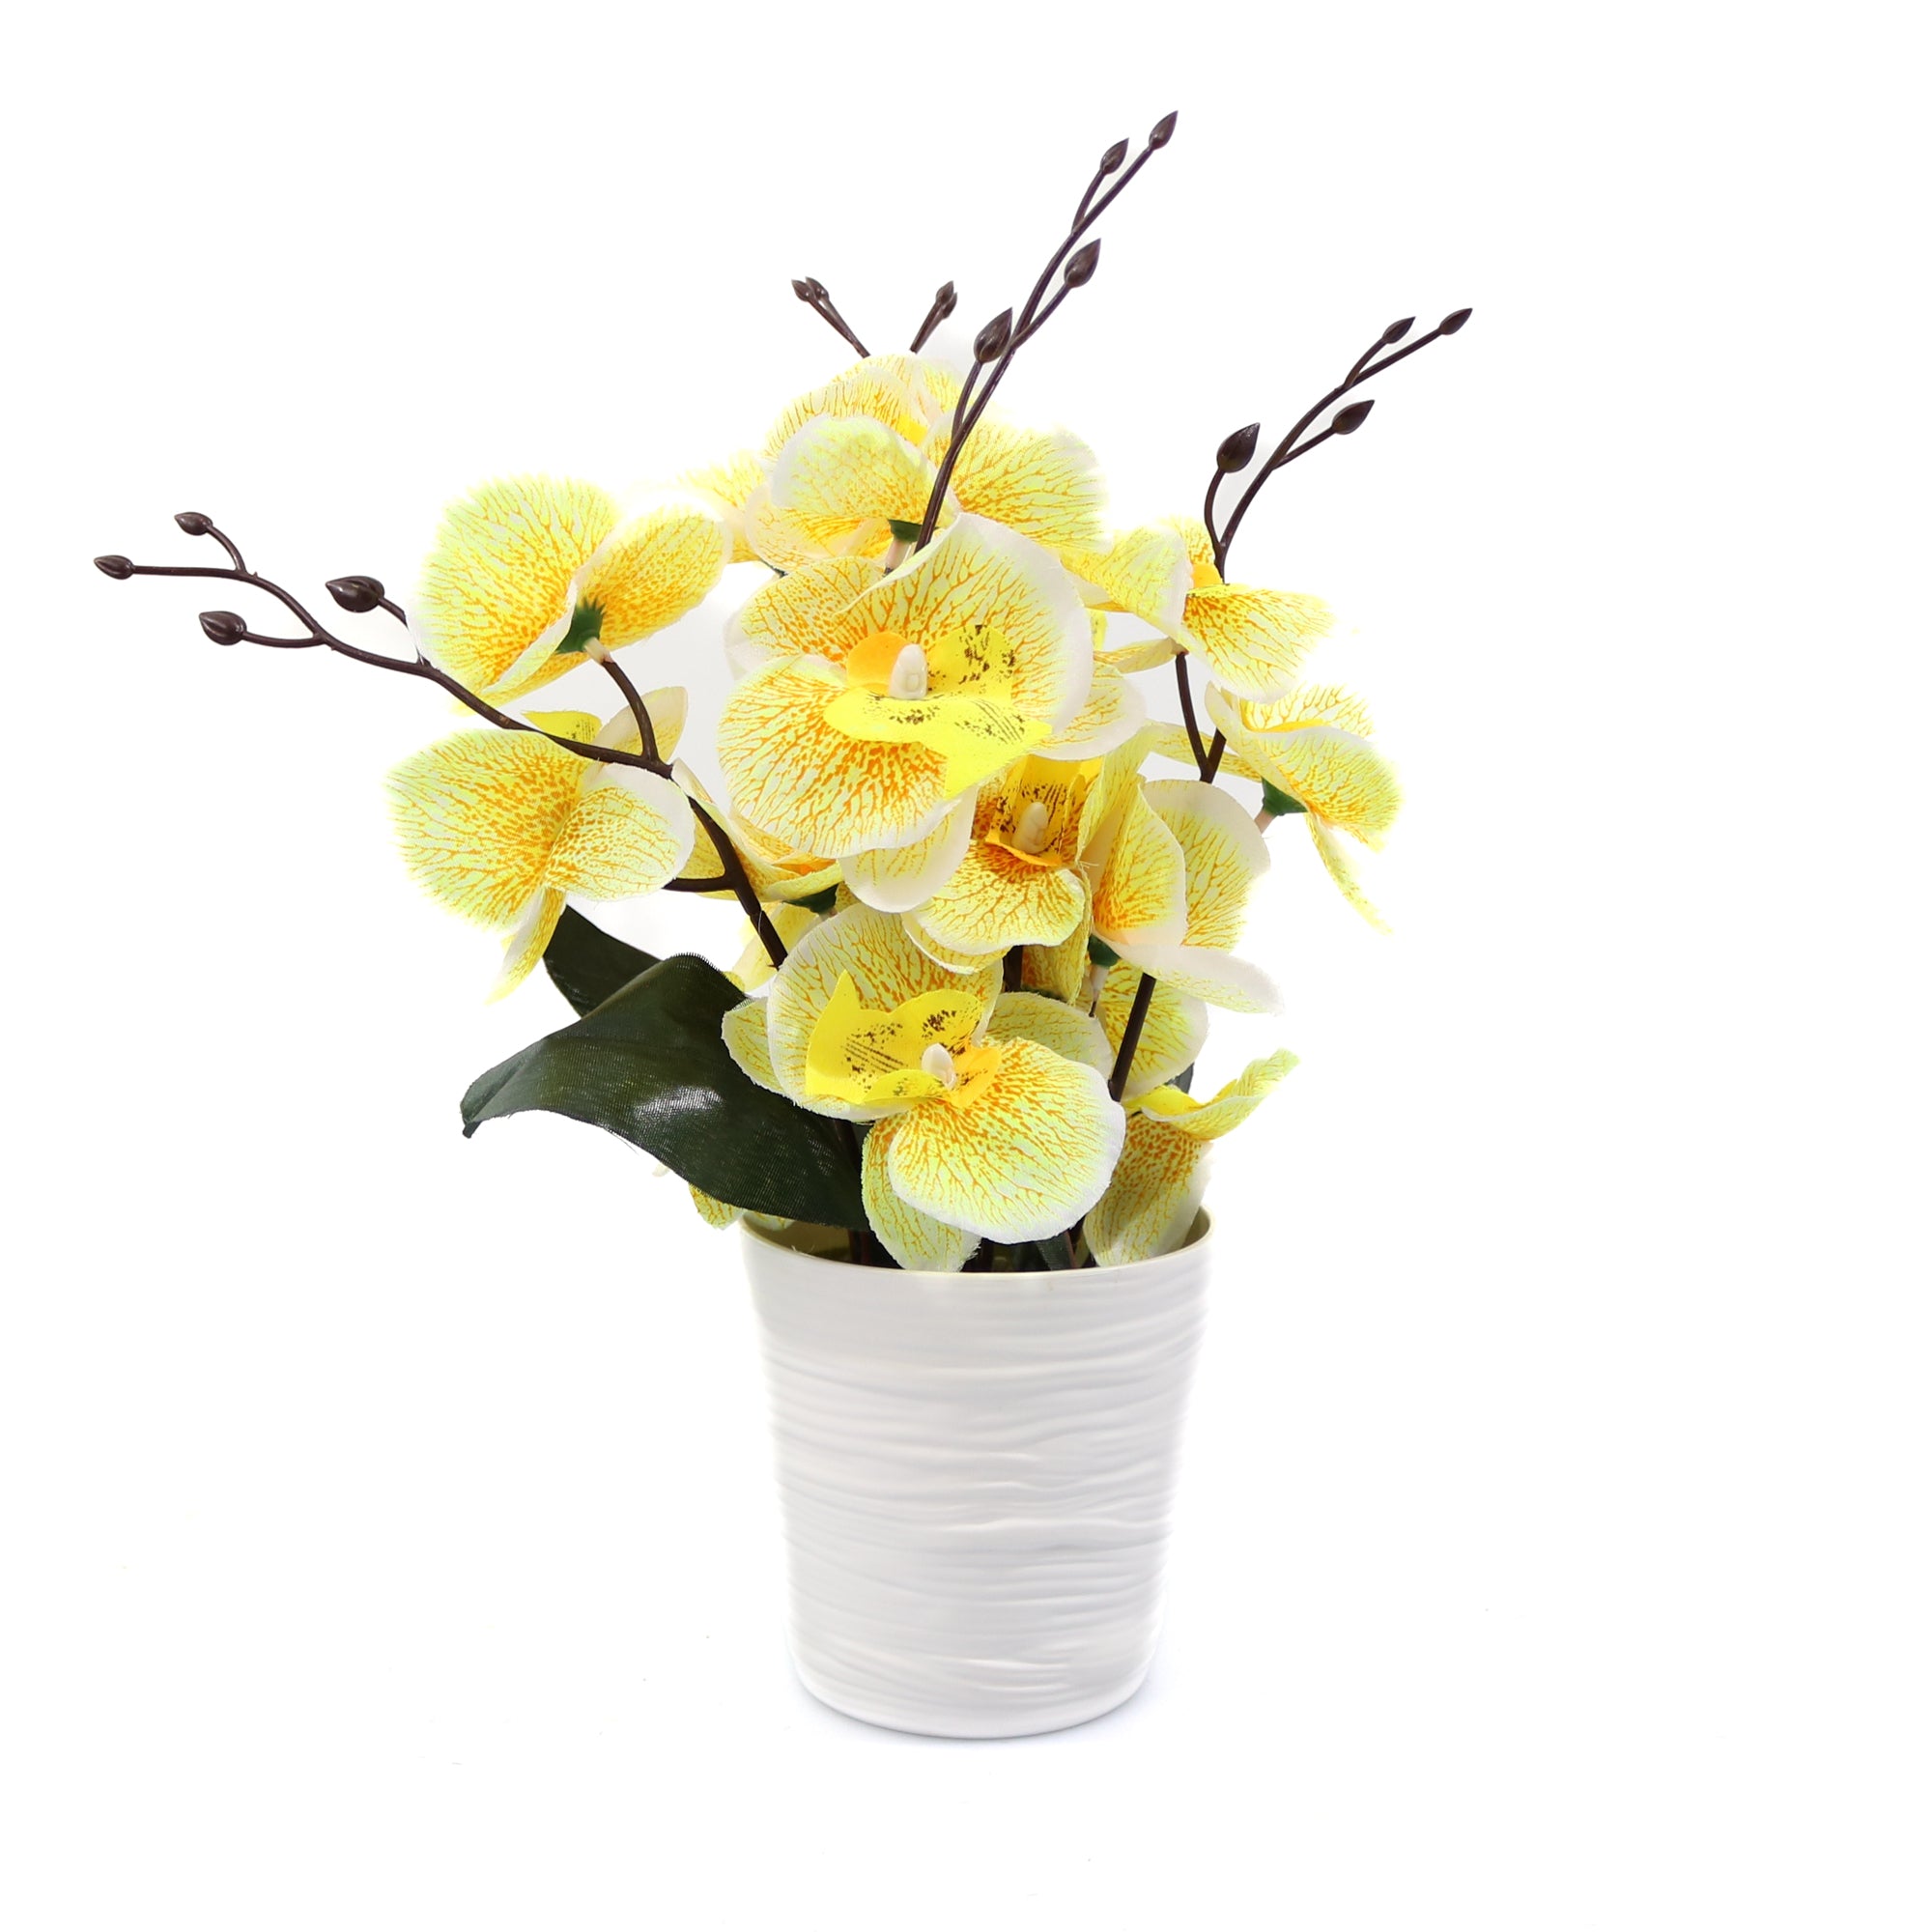 Ghiveci Cu Flori Artificiale, Orchid, Galben, 28cm - Galben, Plastic, 28cm